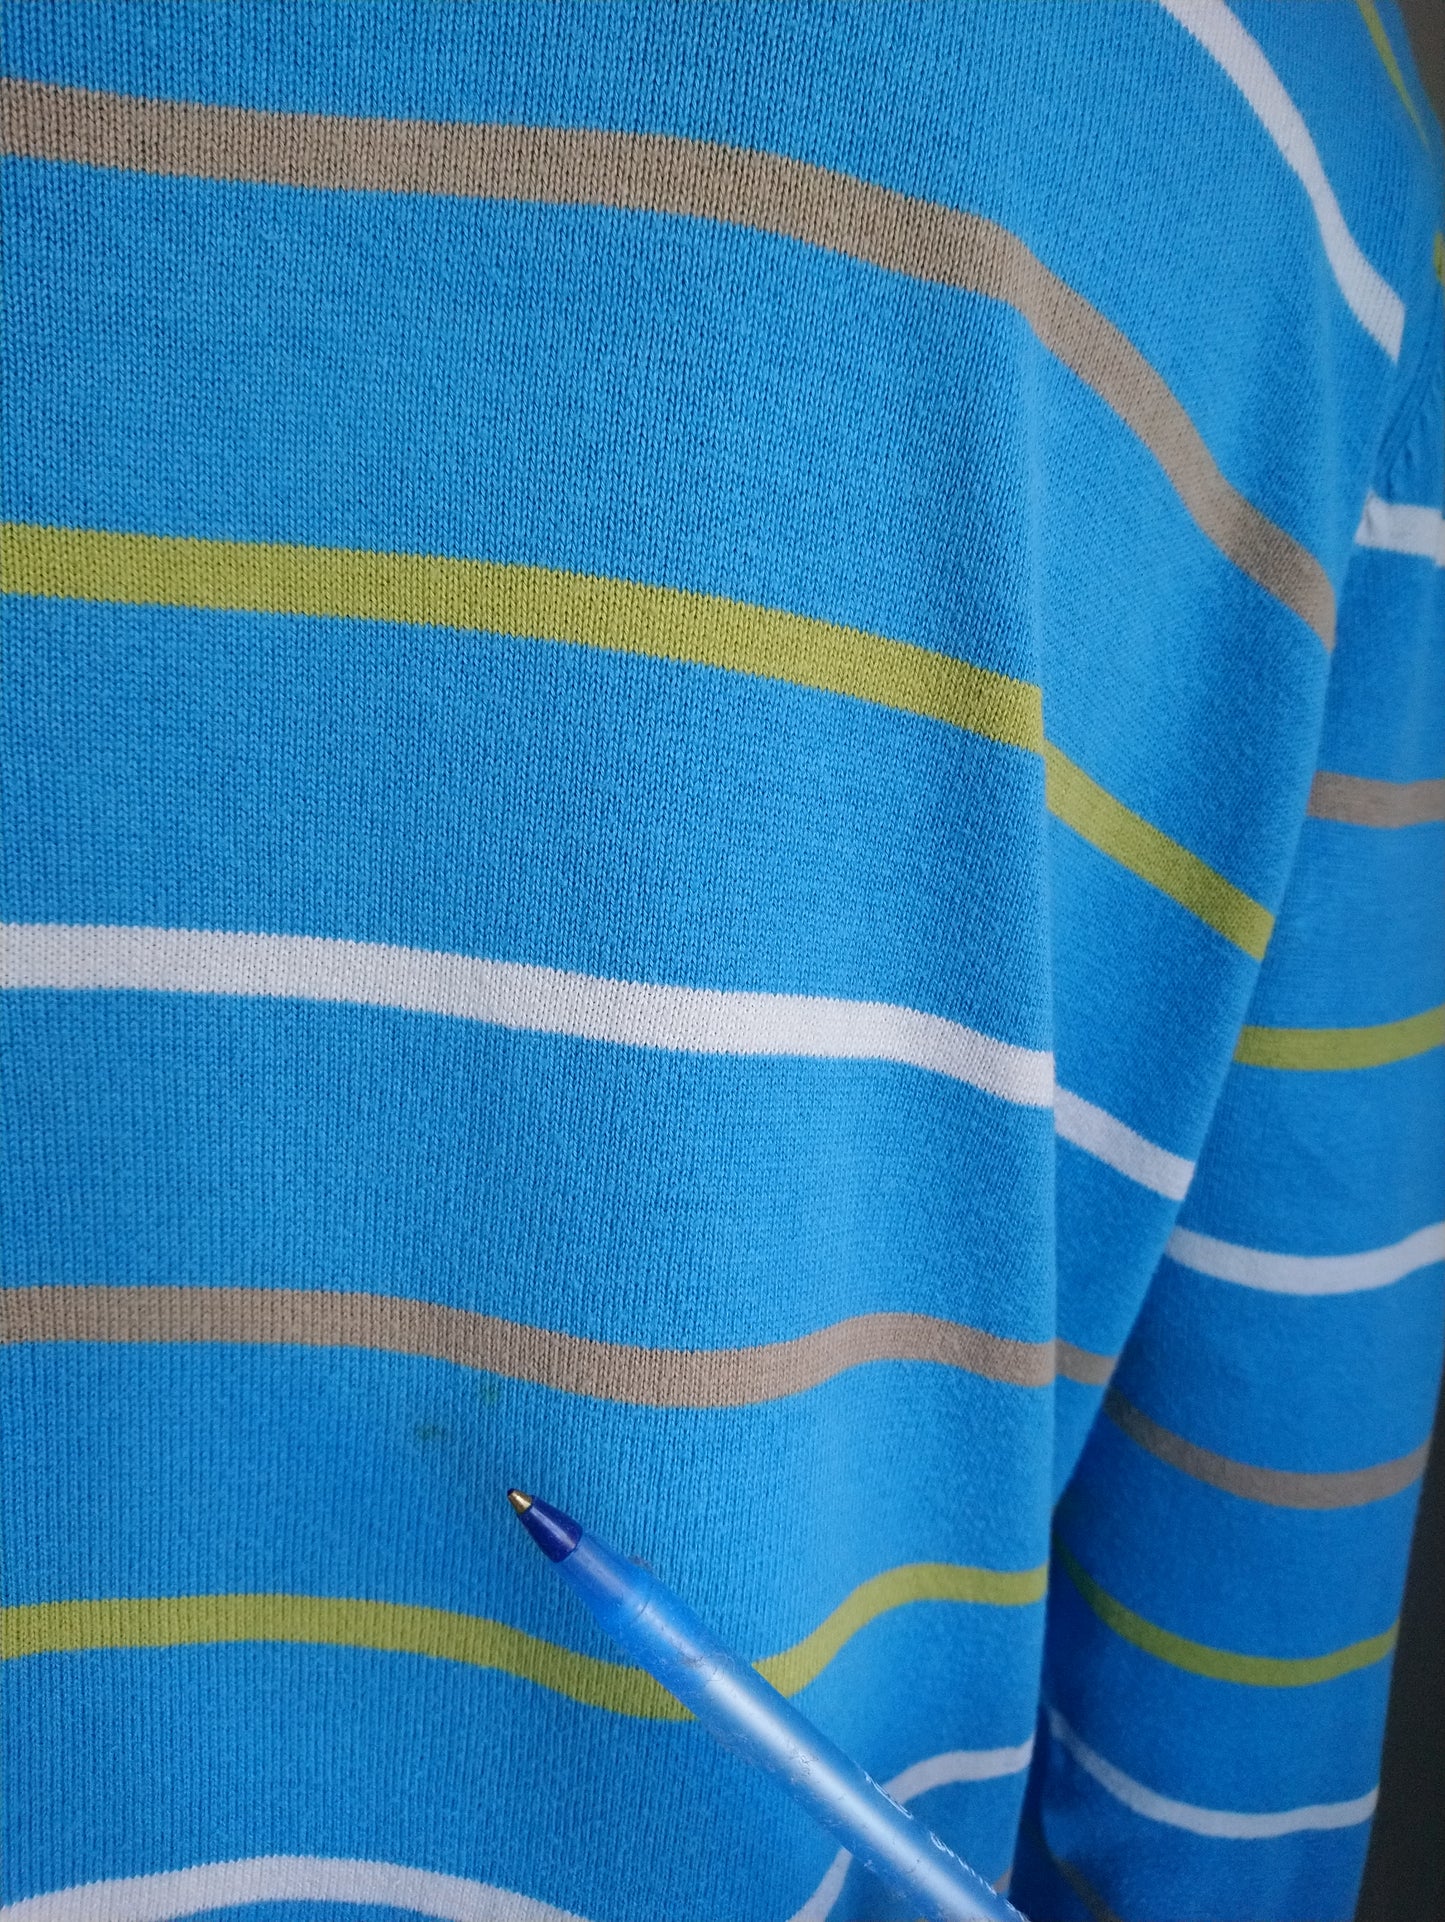 B Opción: suéter PMME Pall Mall con cuello en V. Azul verde marrón blanco rayado. Tamaño xl. Lugares